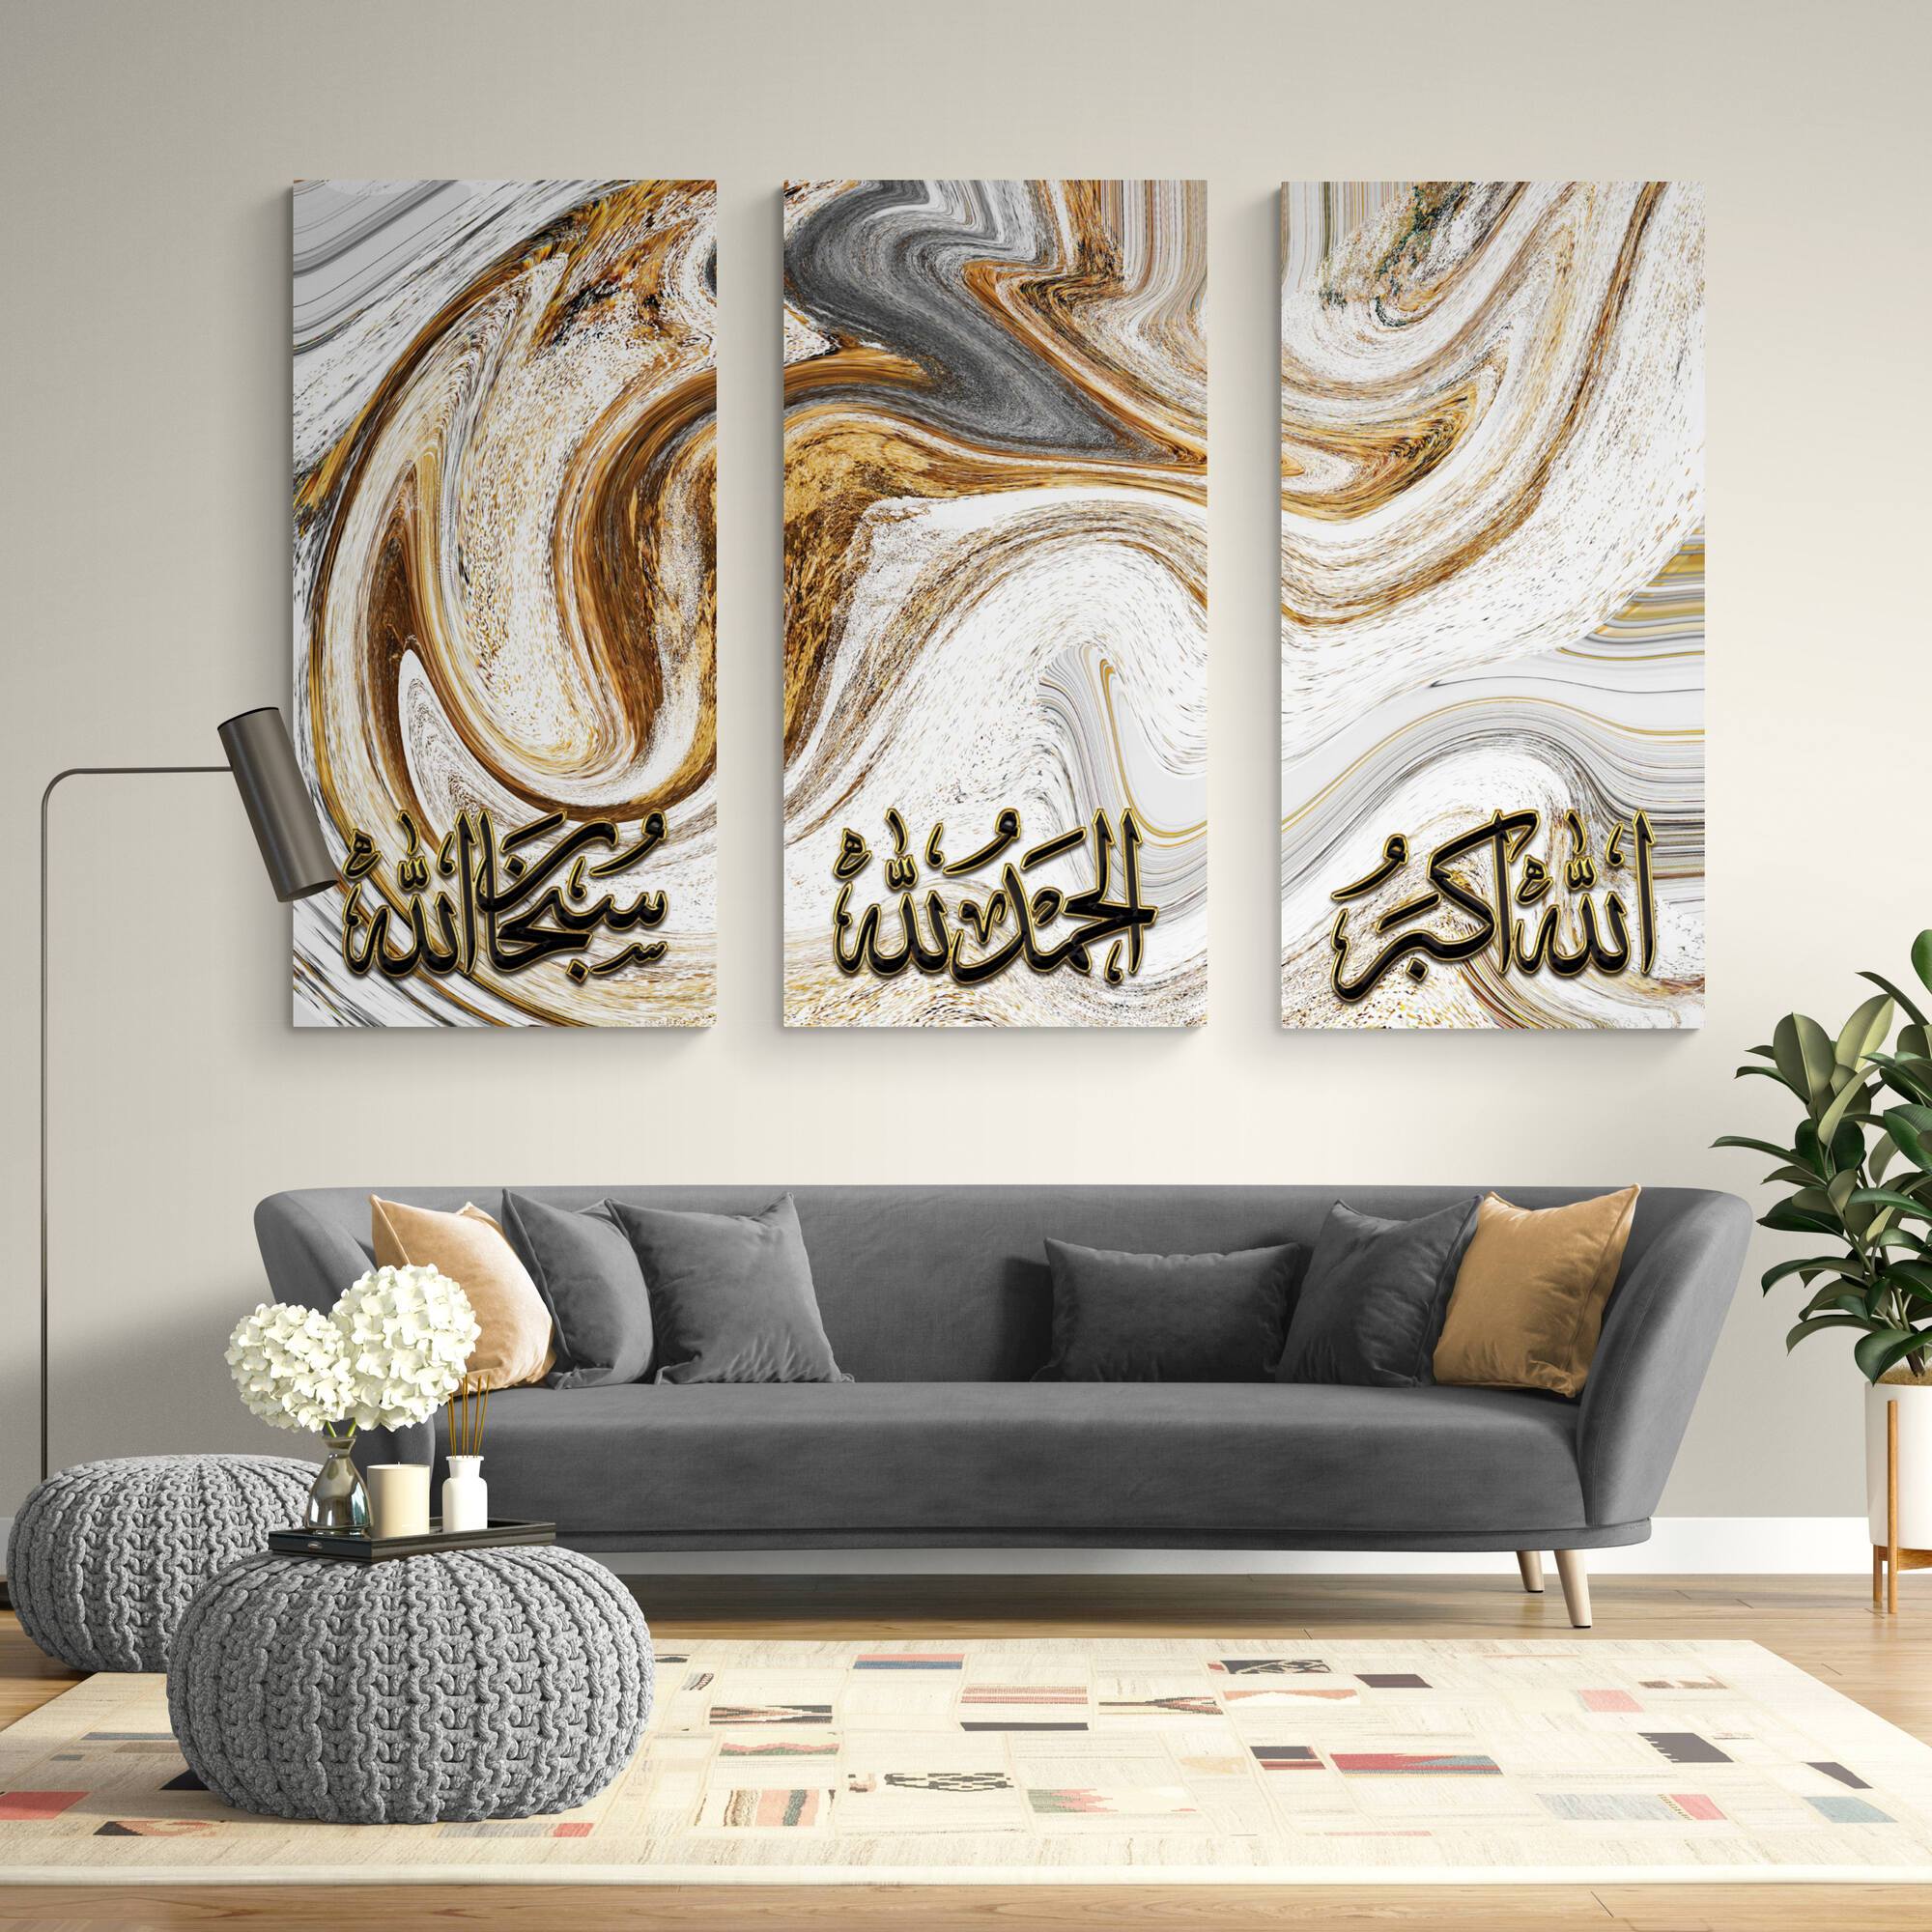 Modern 3-panel Islamic art in Thuluth, 'Allahu Akbar, Alhamdulillah, Subhanallah', with black and gold marbling